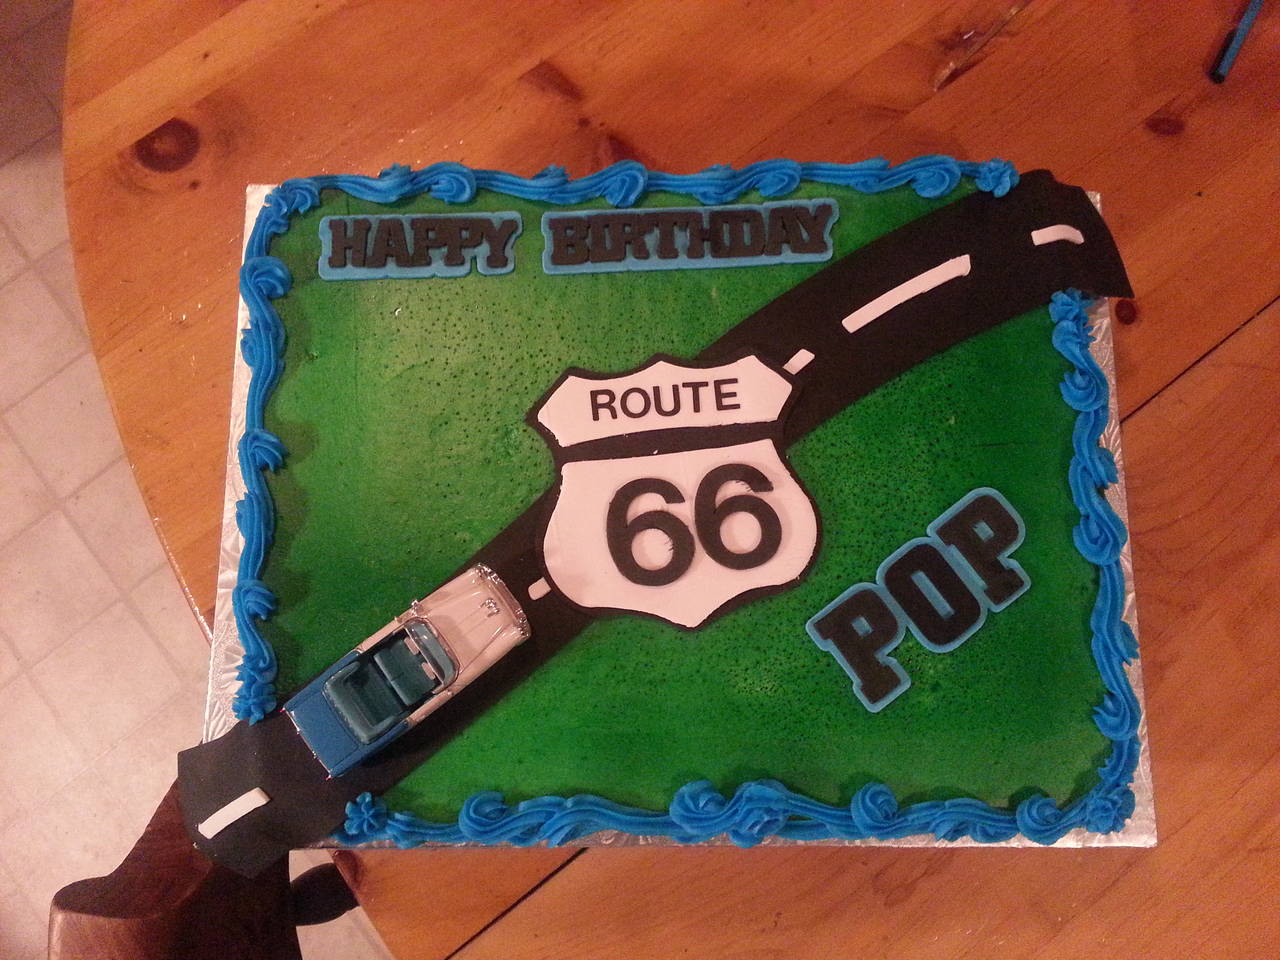 Route 66 cake